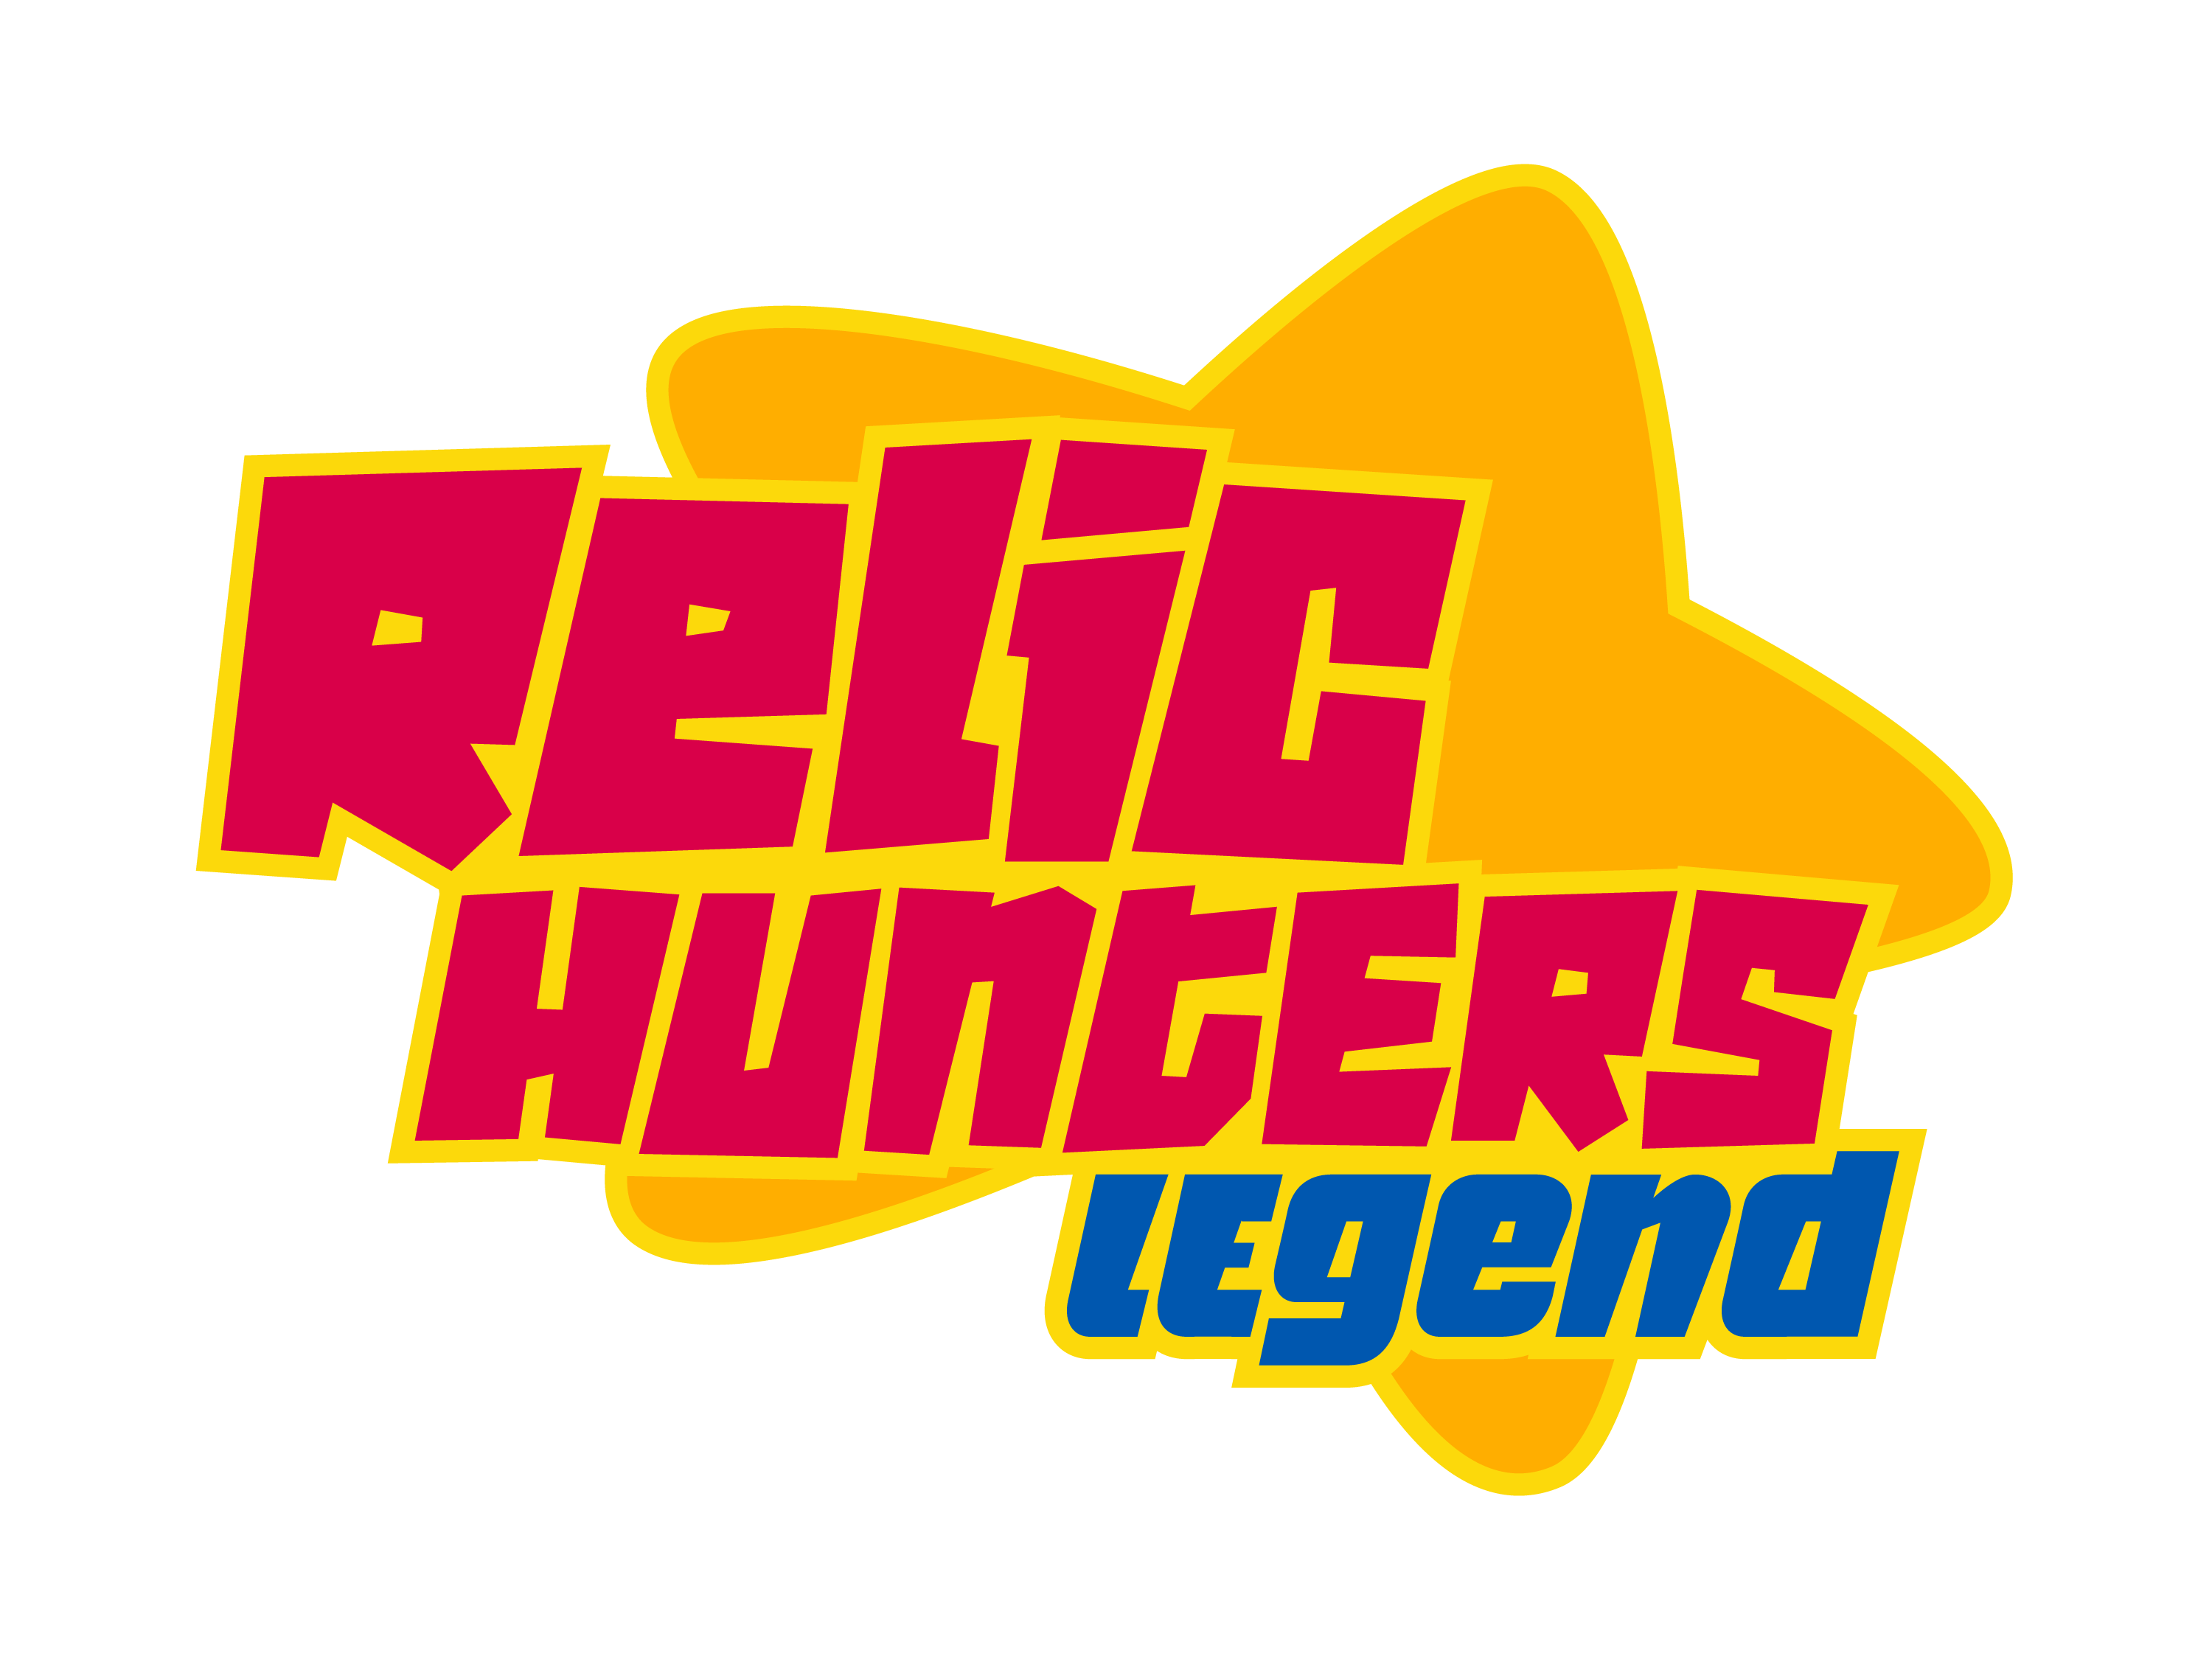 Rogue Snail - Joguem Relic Hunters Legend! on X: Amanhã terá uma